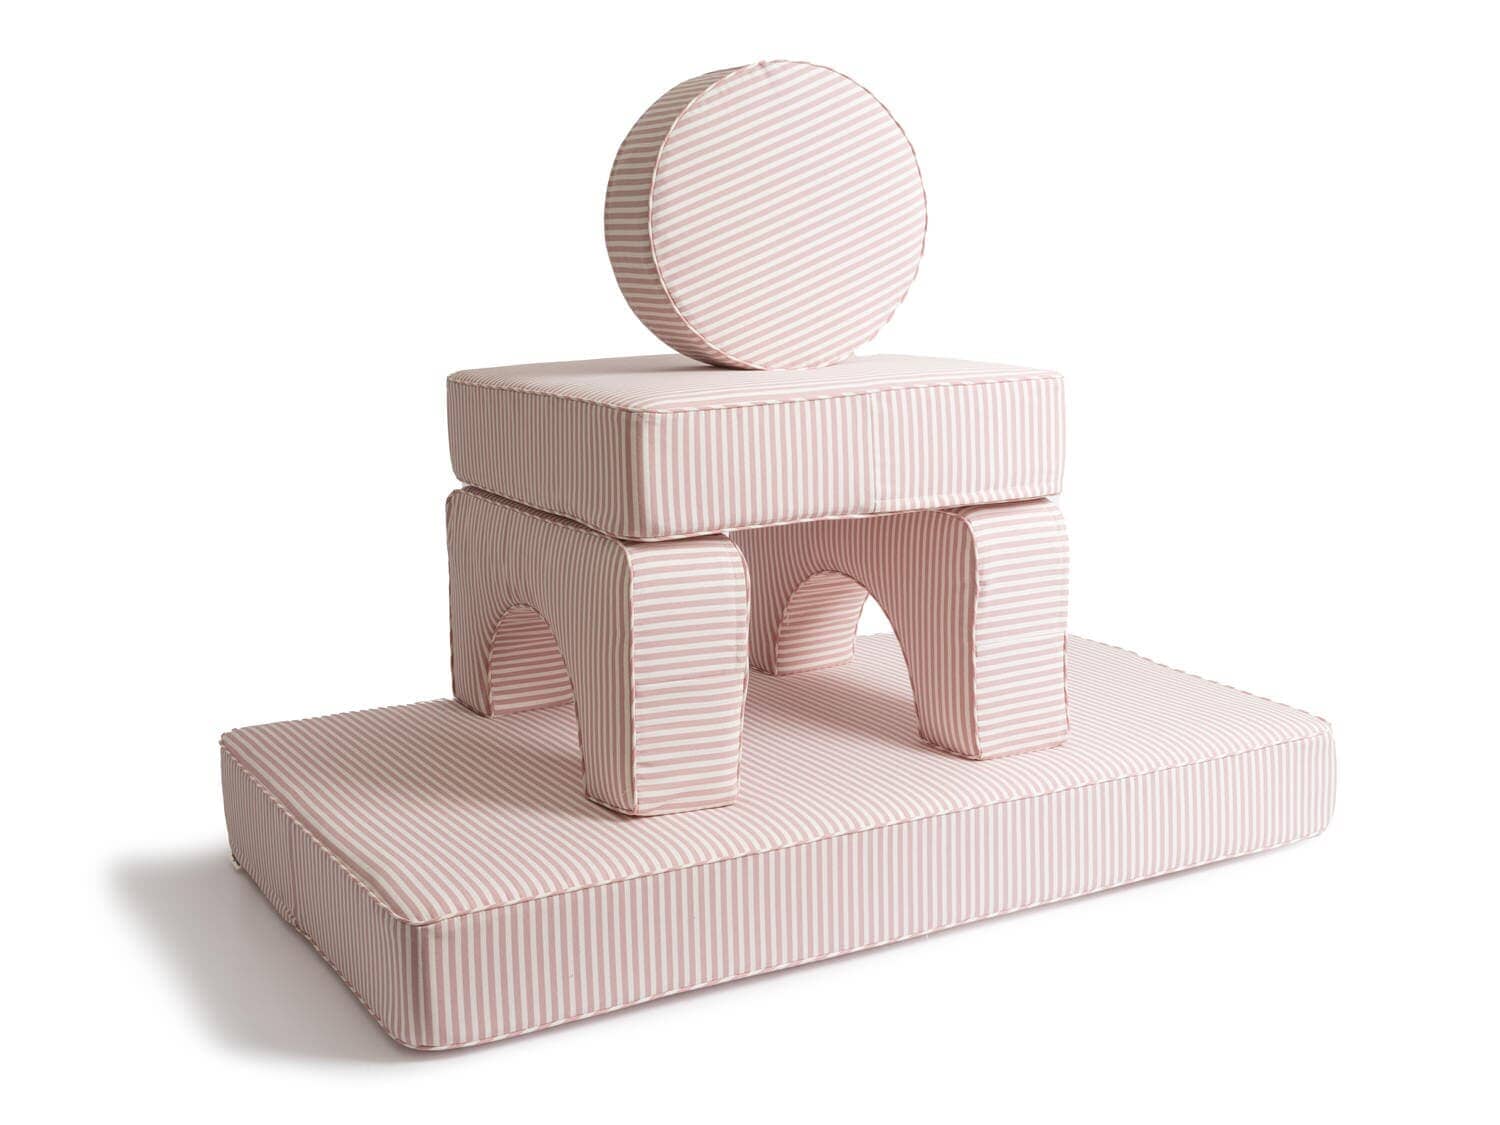 Studio image of pink modular pillow stack